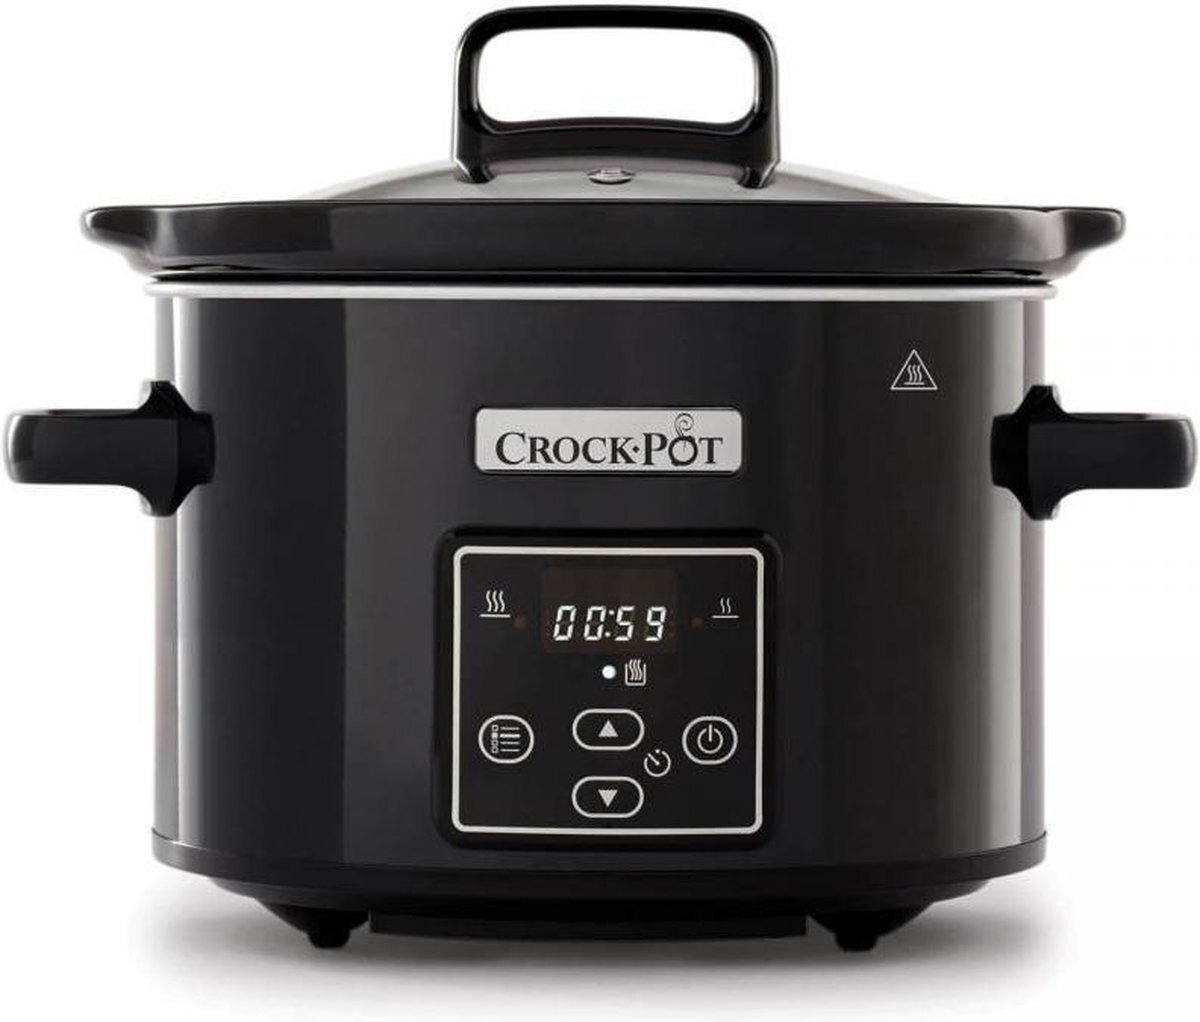 Crock-Pot Crock-Pot Slowcooker 2,4L CR061 rijstkoker / stoomkoker kopen? | Kieskeurig.nl | helpt